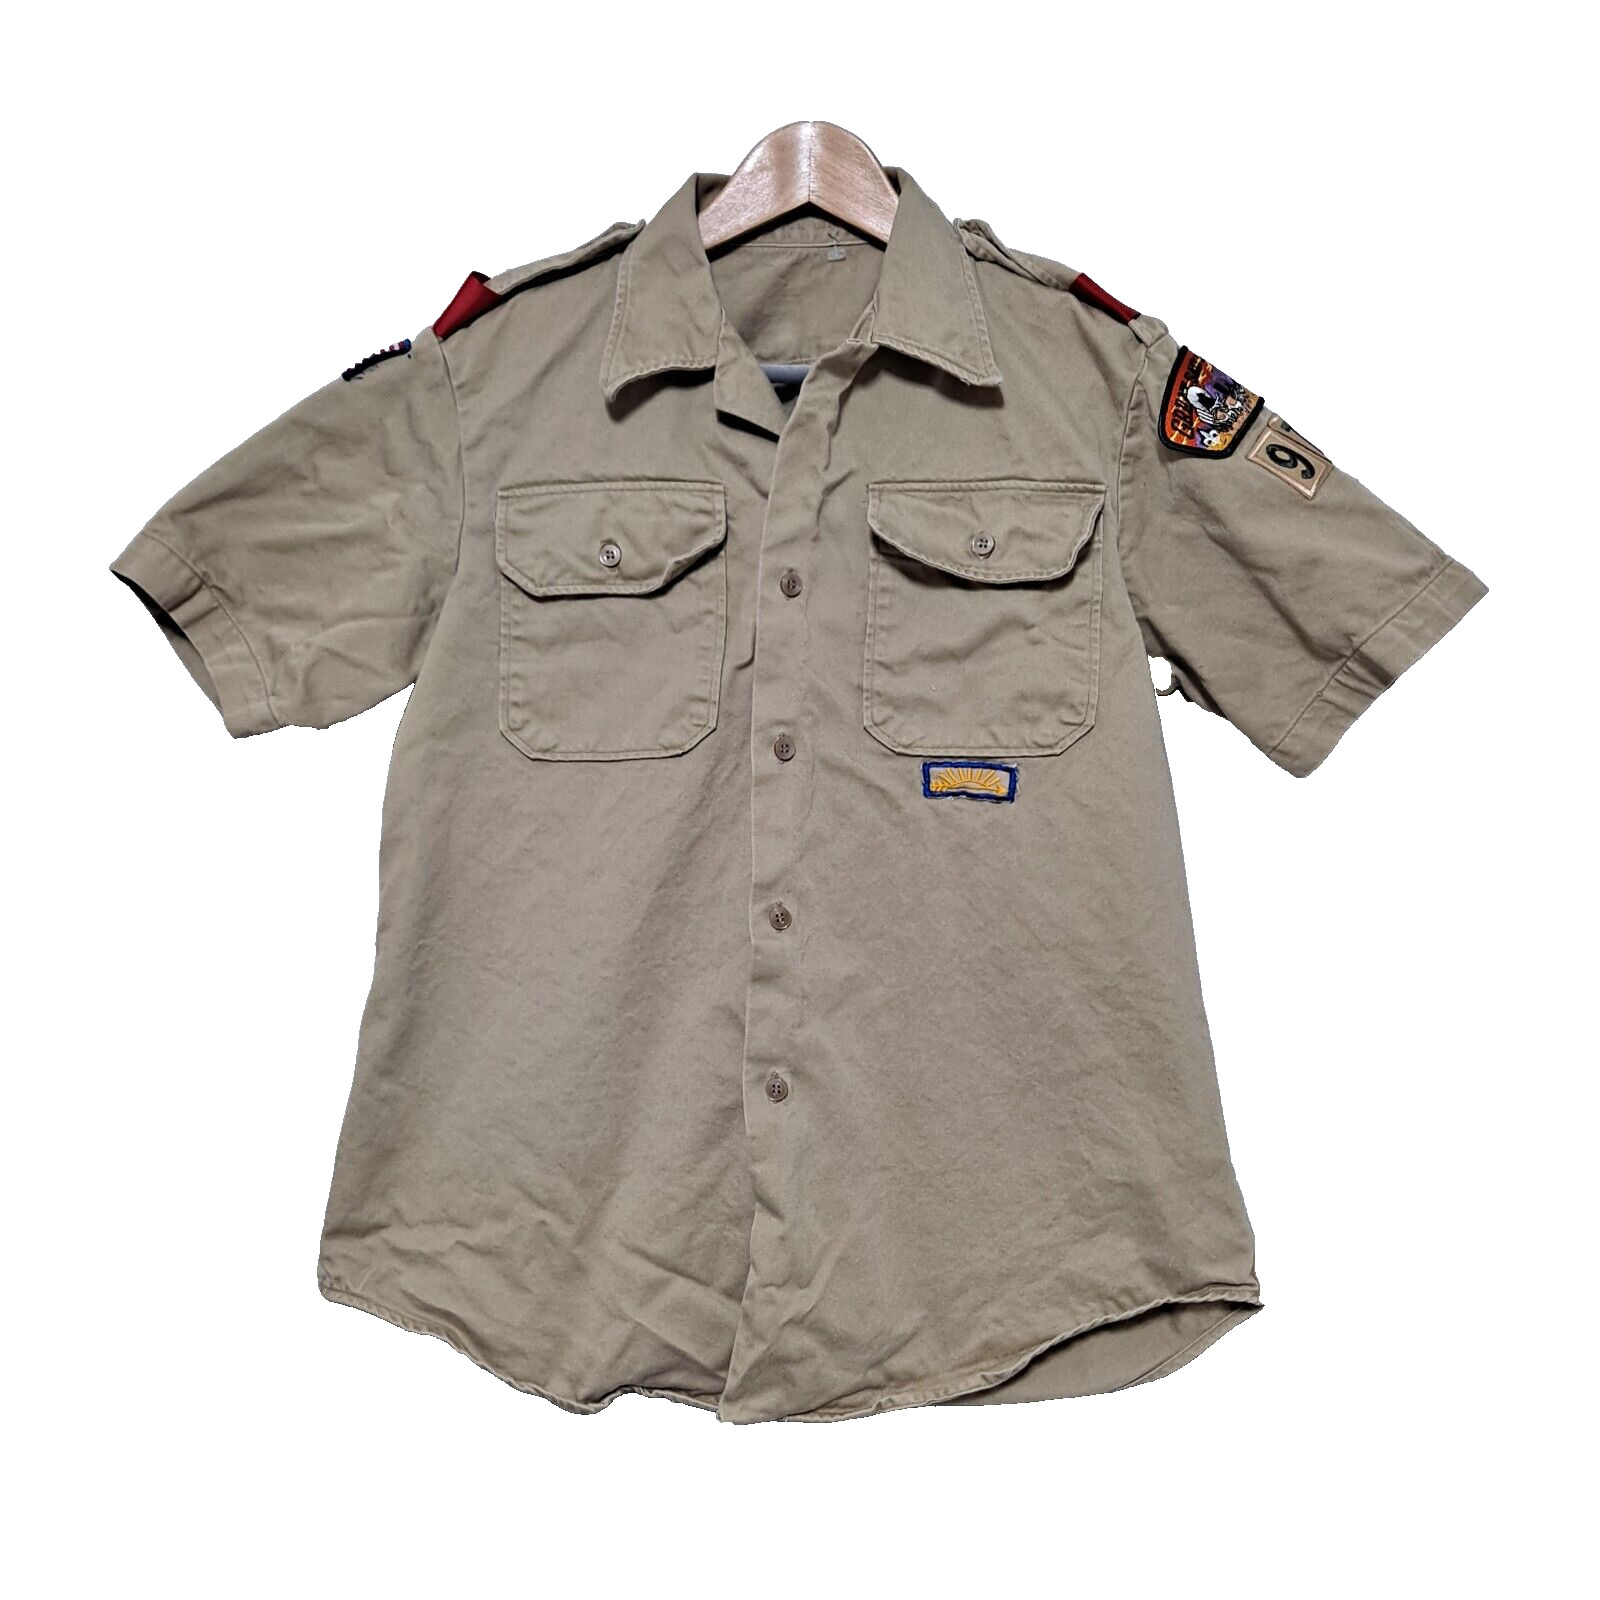 Vintage Army Uniform Shirt Adult Medium Boy Scout America Customized BSA Beige